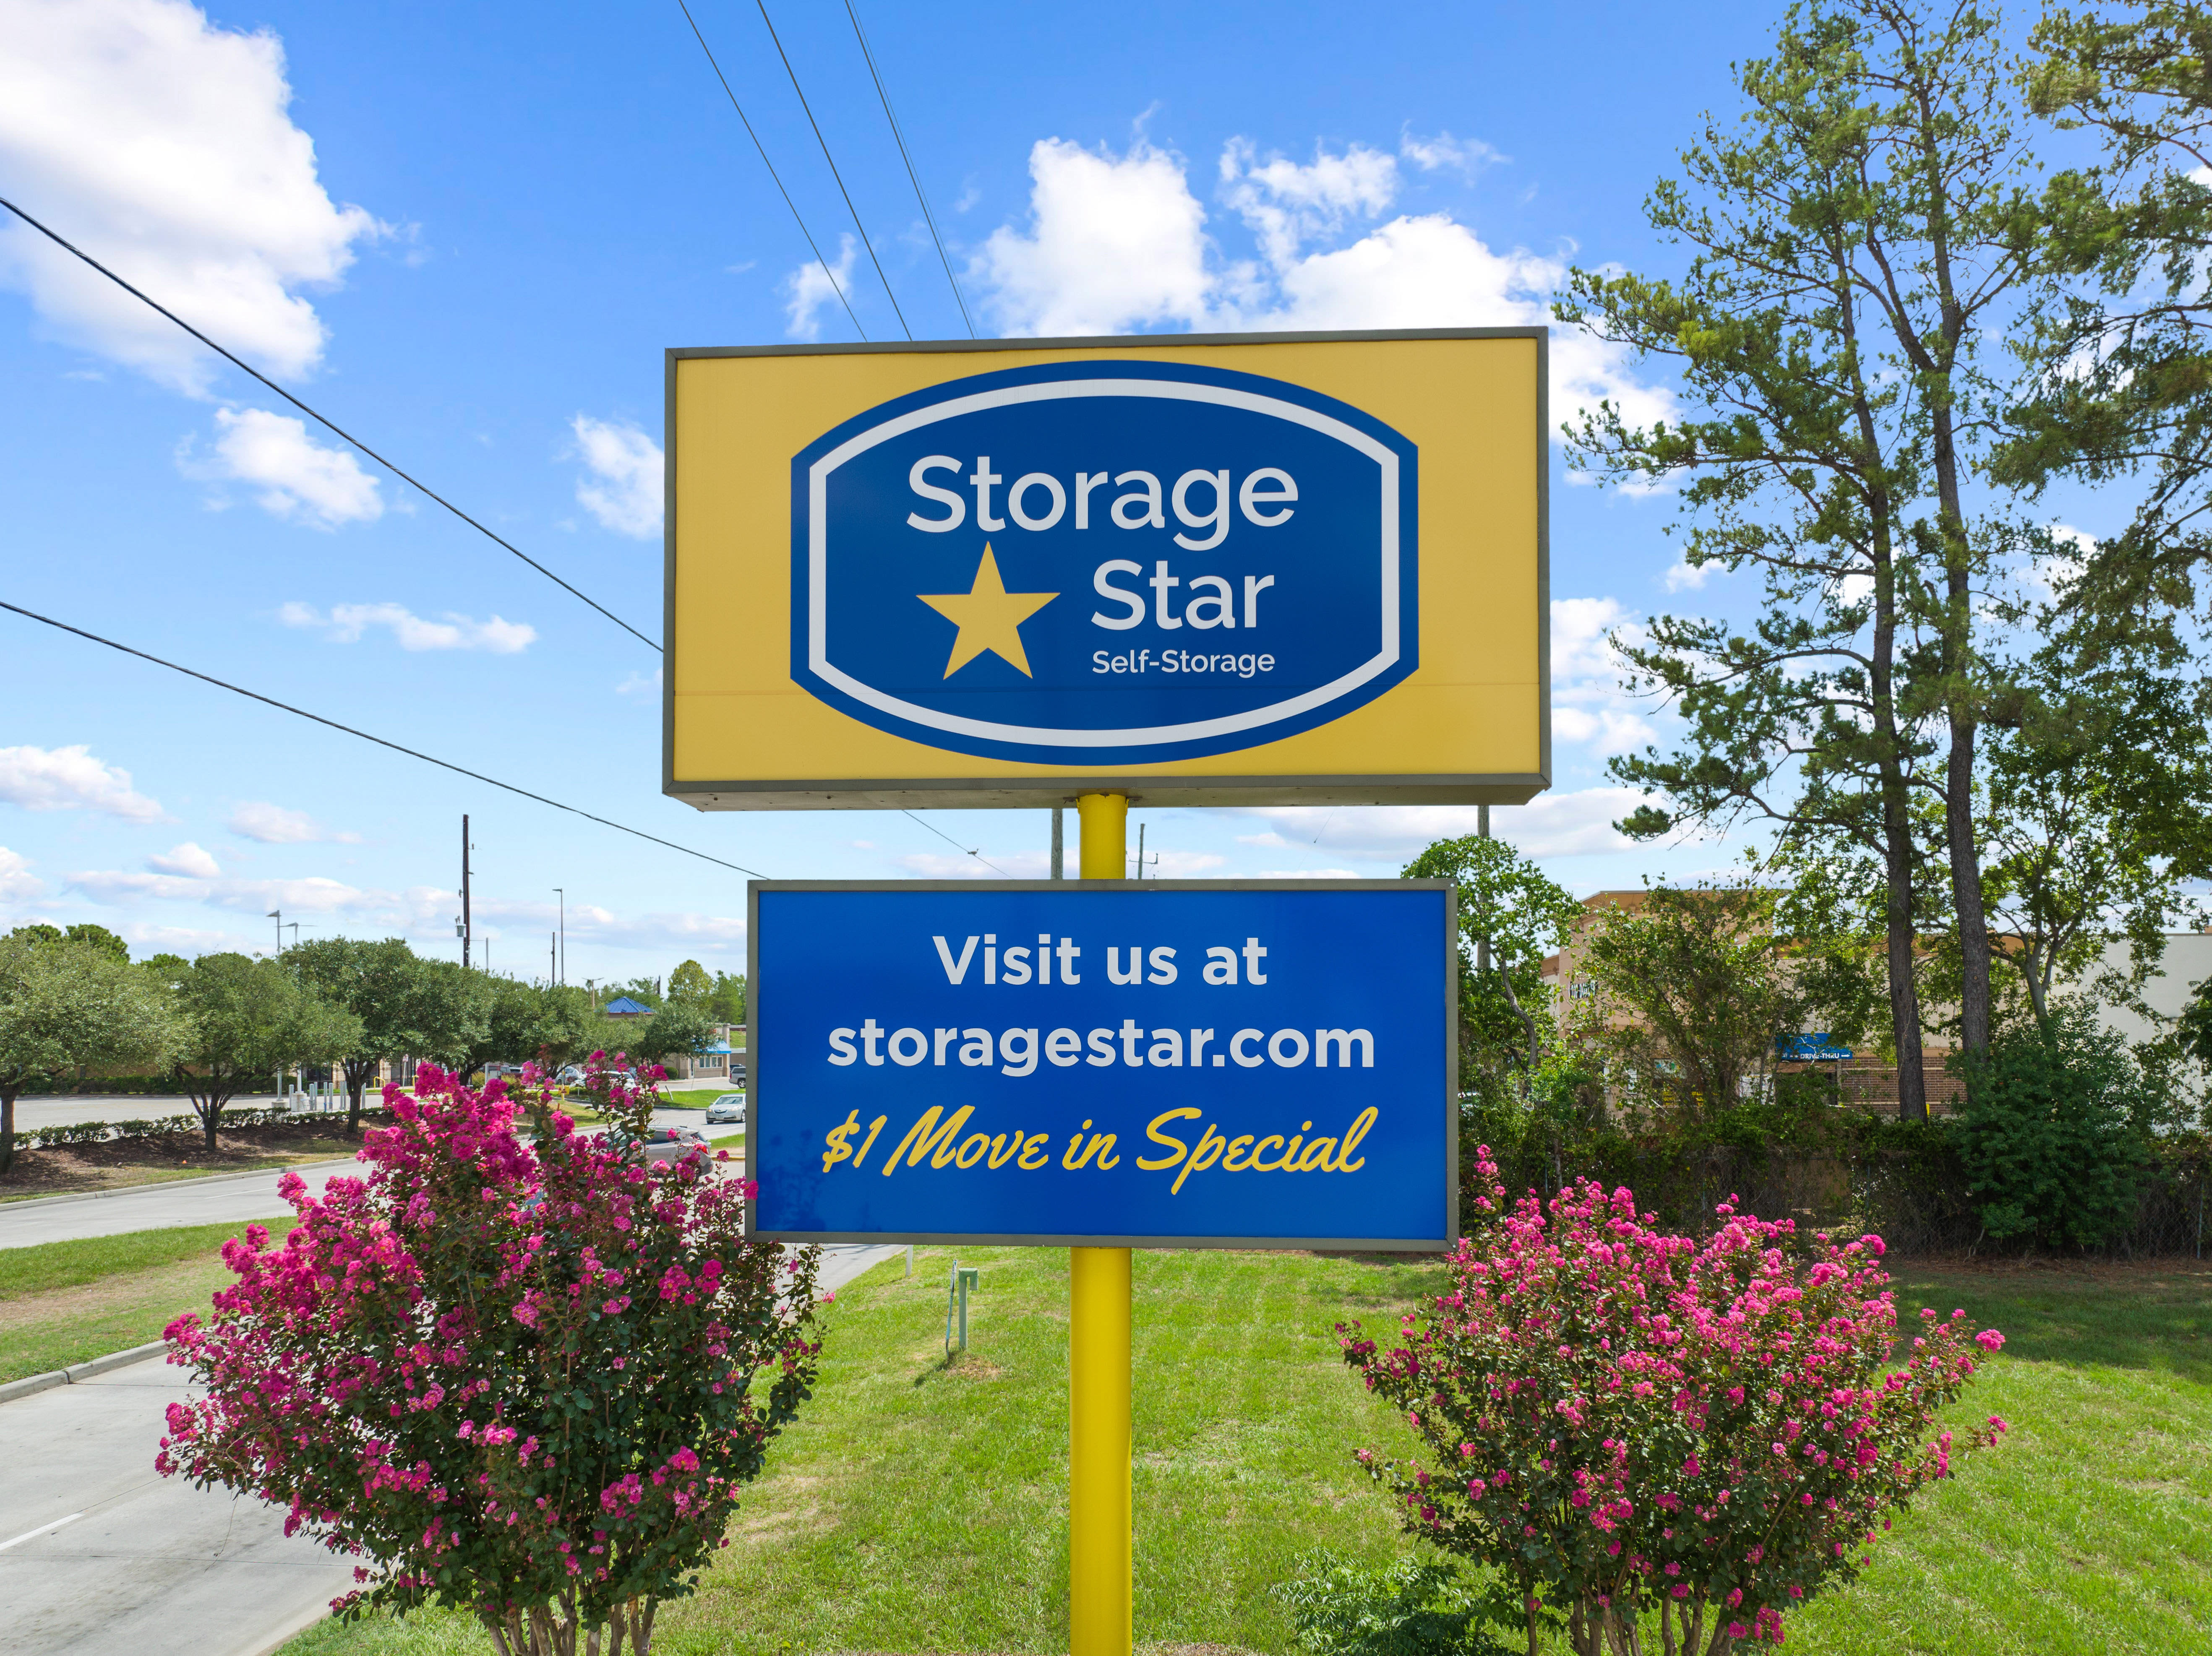 sighn at Storage Star Lake Travis Austin in Austin, Texas